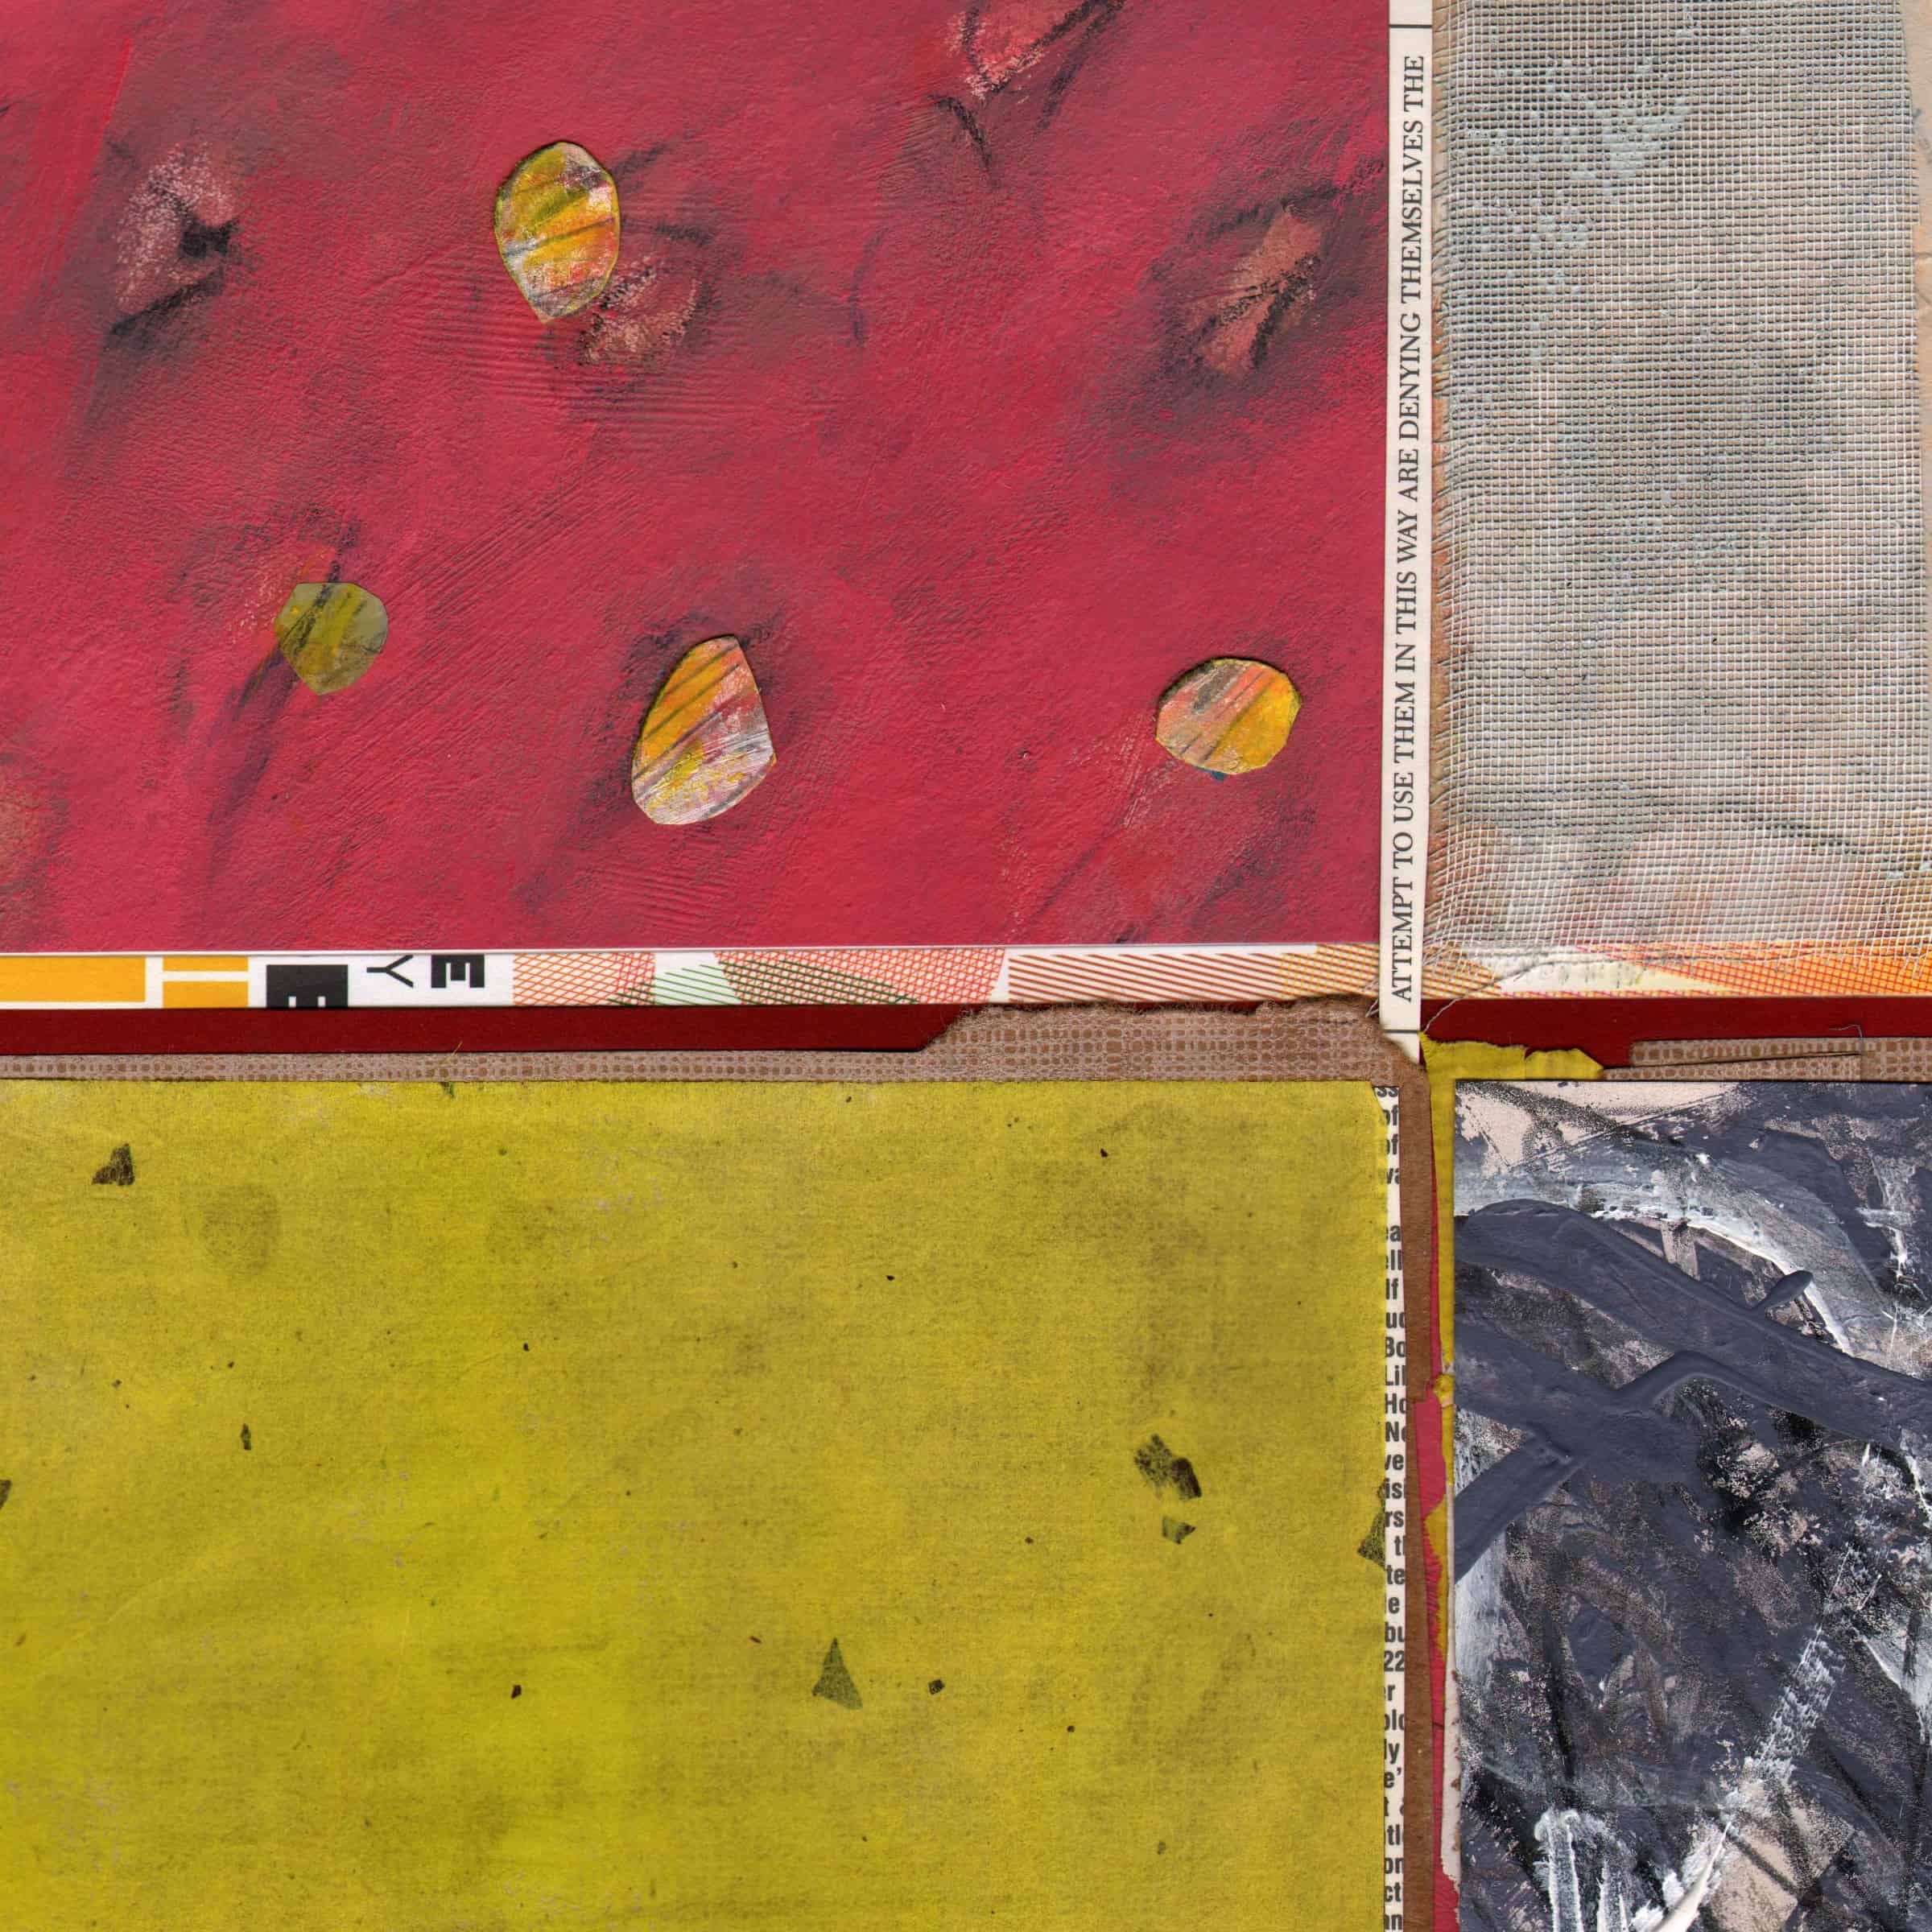 Suzan Fant, GRIDscape No.8, mixed media collage, 8 x 8 inches, 2013